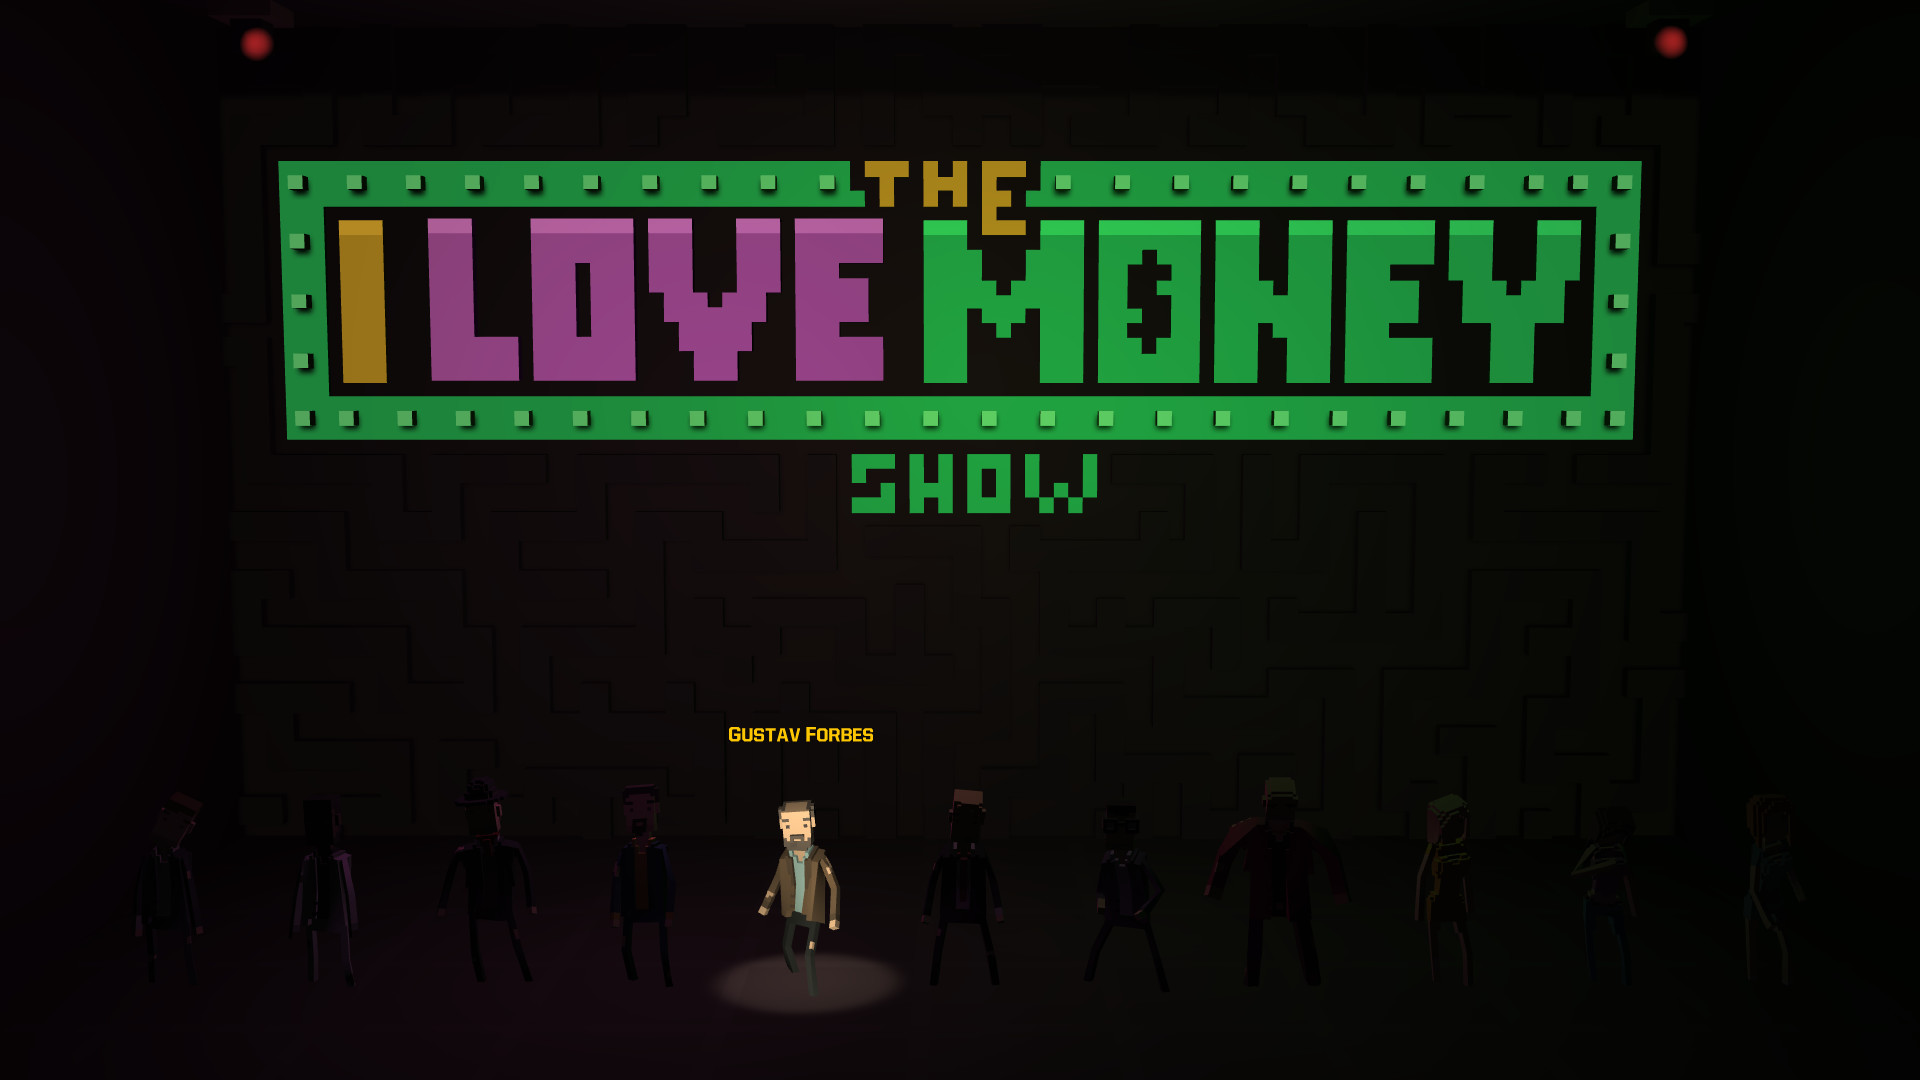 The 'I Love Money' Show screenshot